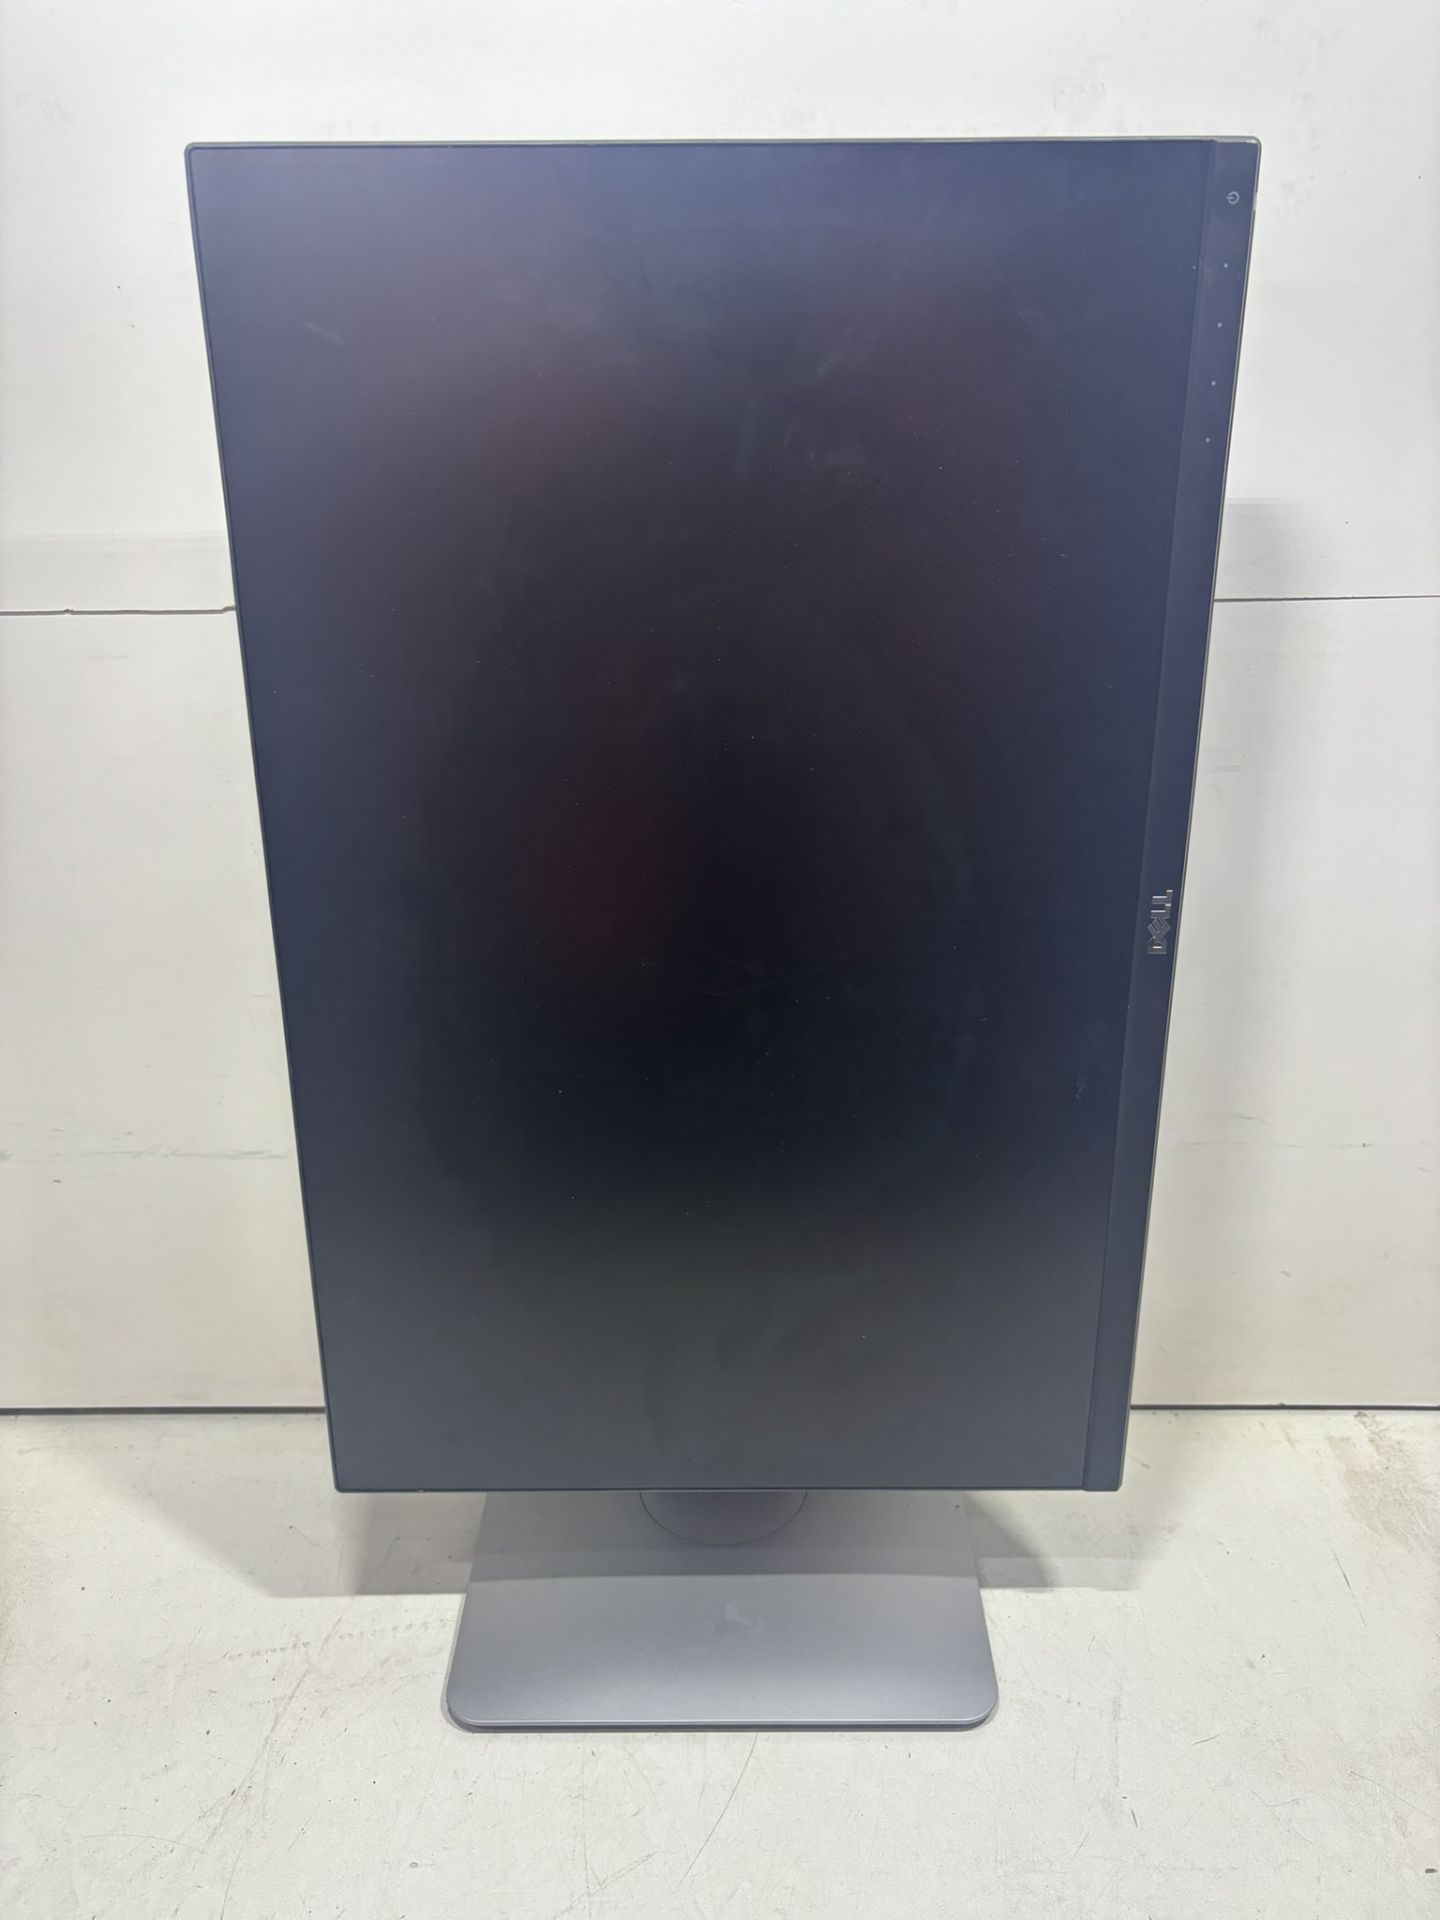 4 x Dell U2415B 24? Height Adjustable Monitors - Image 2 of 4